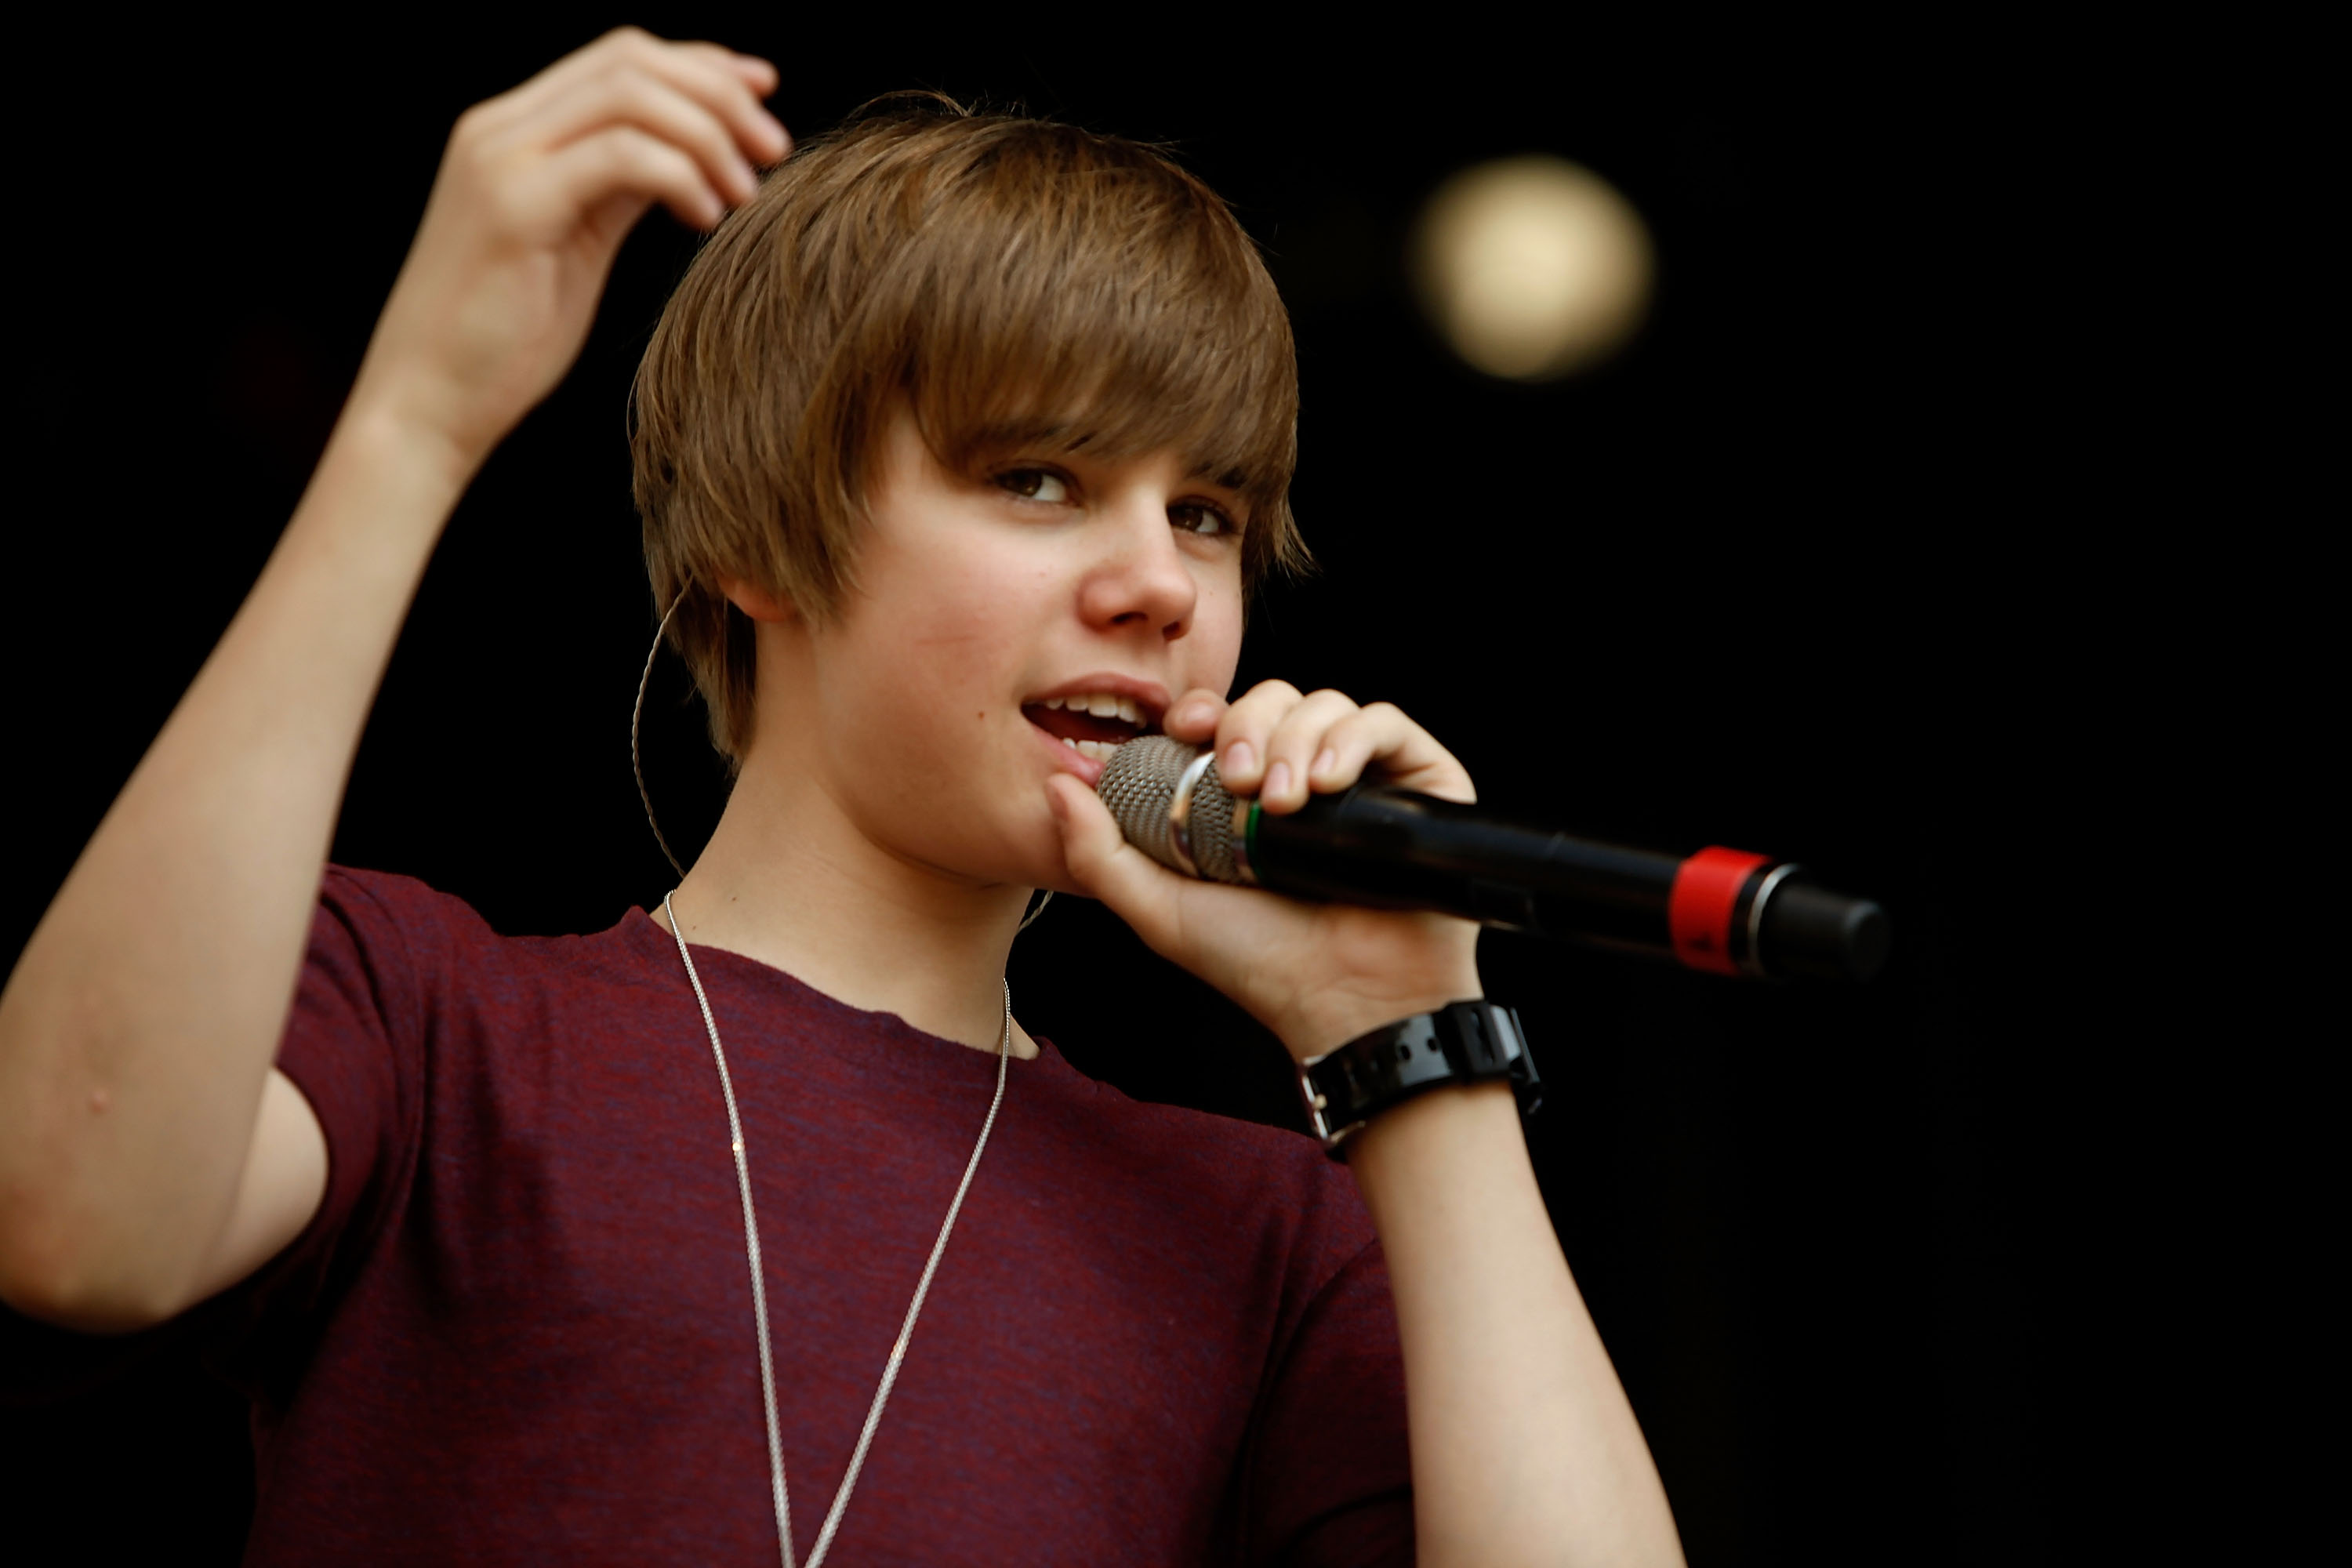 10 Iconic Justin Bieber Haircuts  Haircut Inspiration